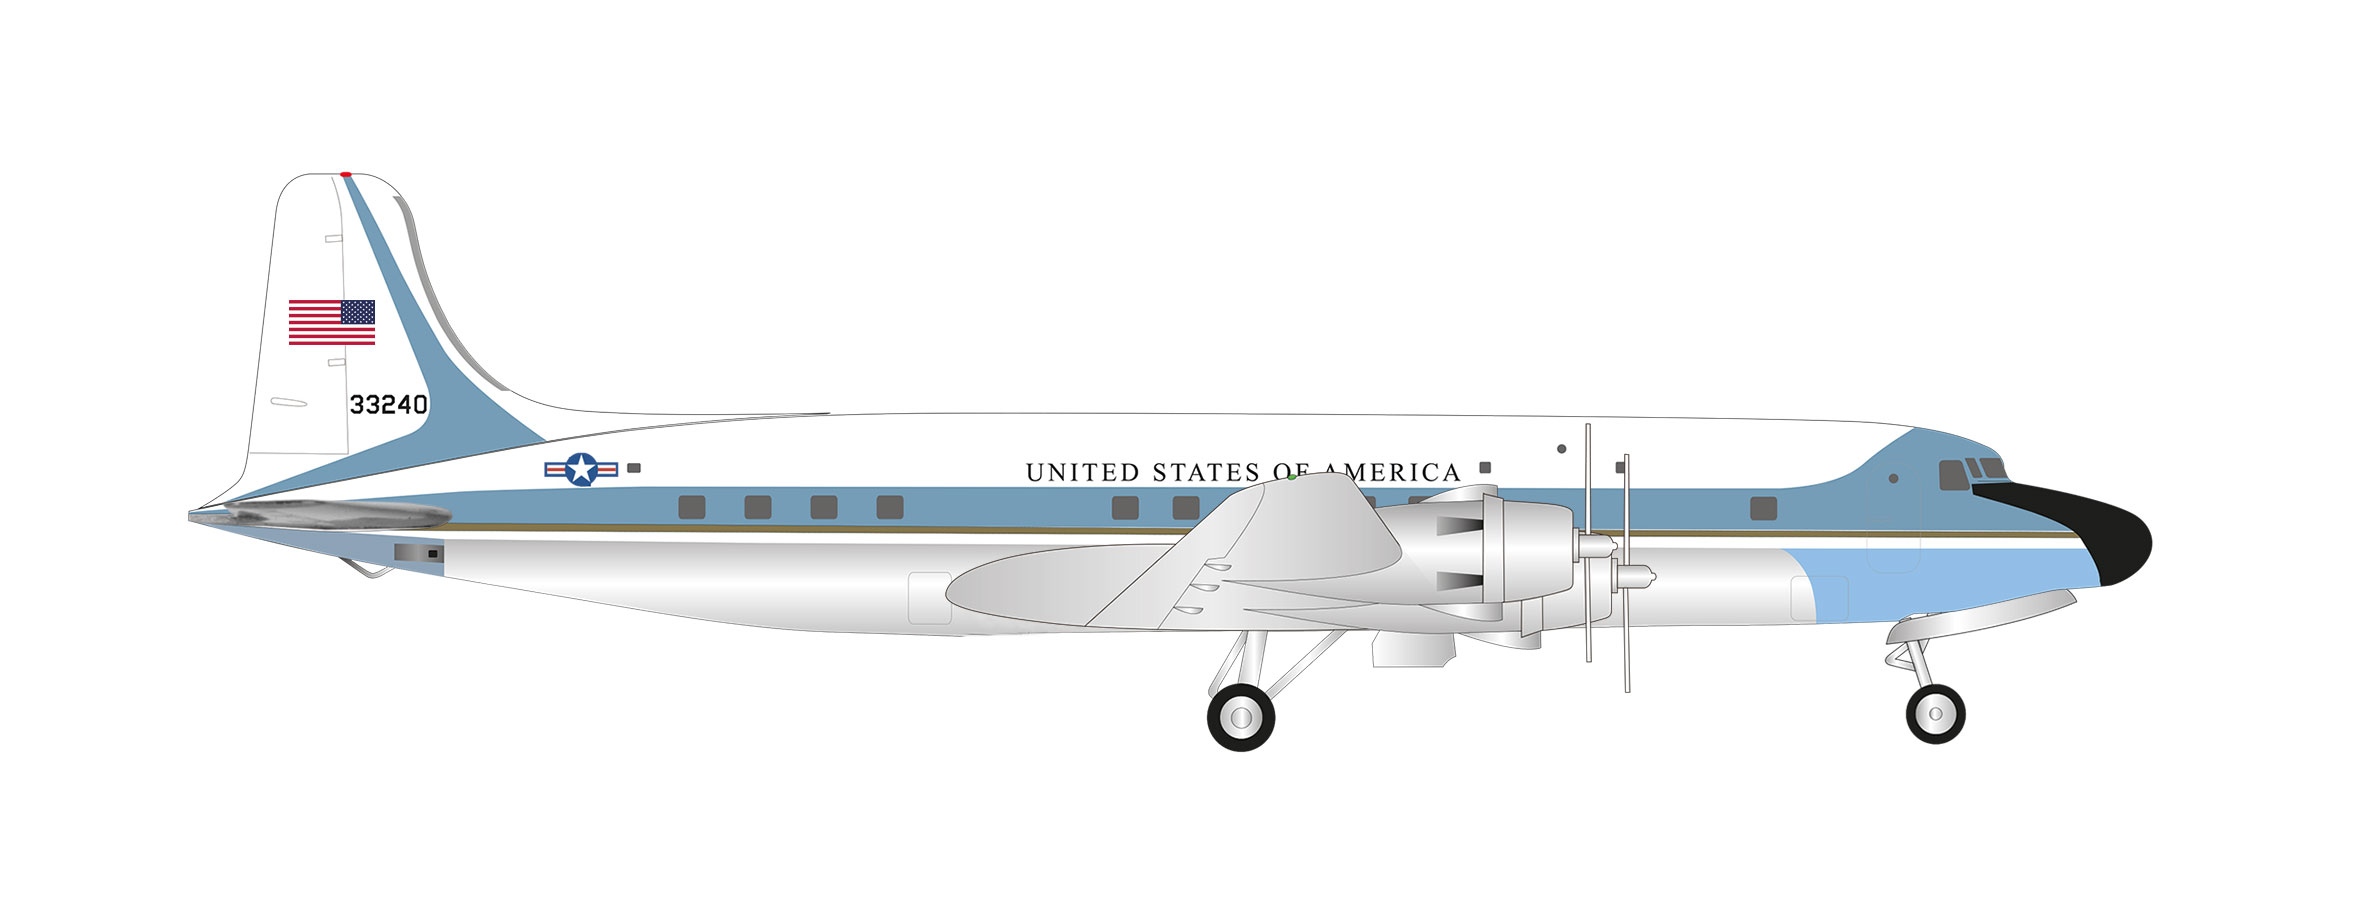 U.S. Air Force Douglas VC-11 "Air Force One"